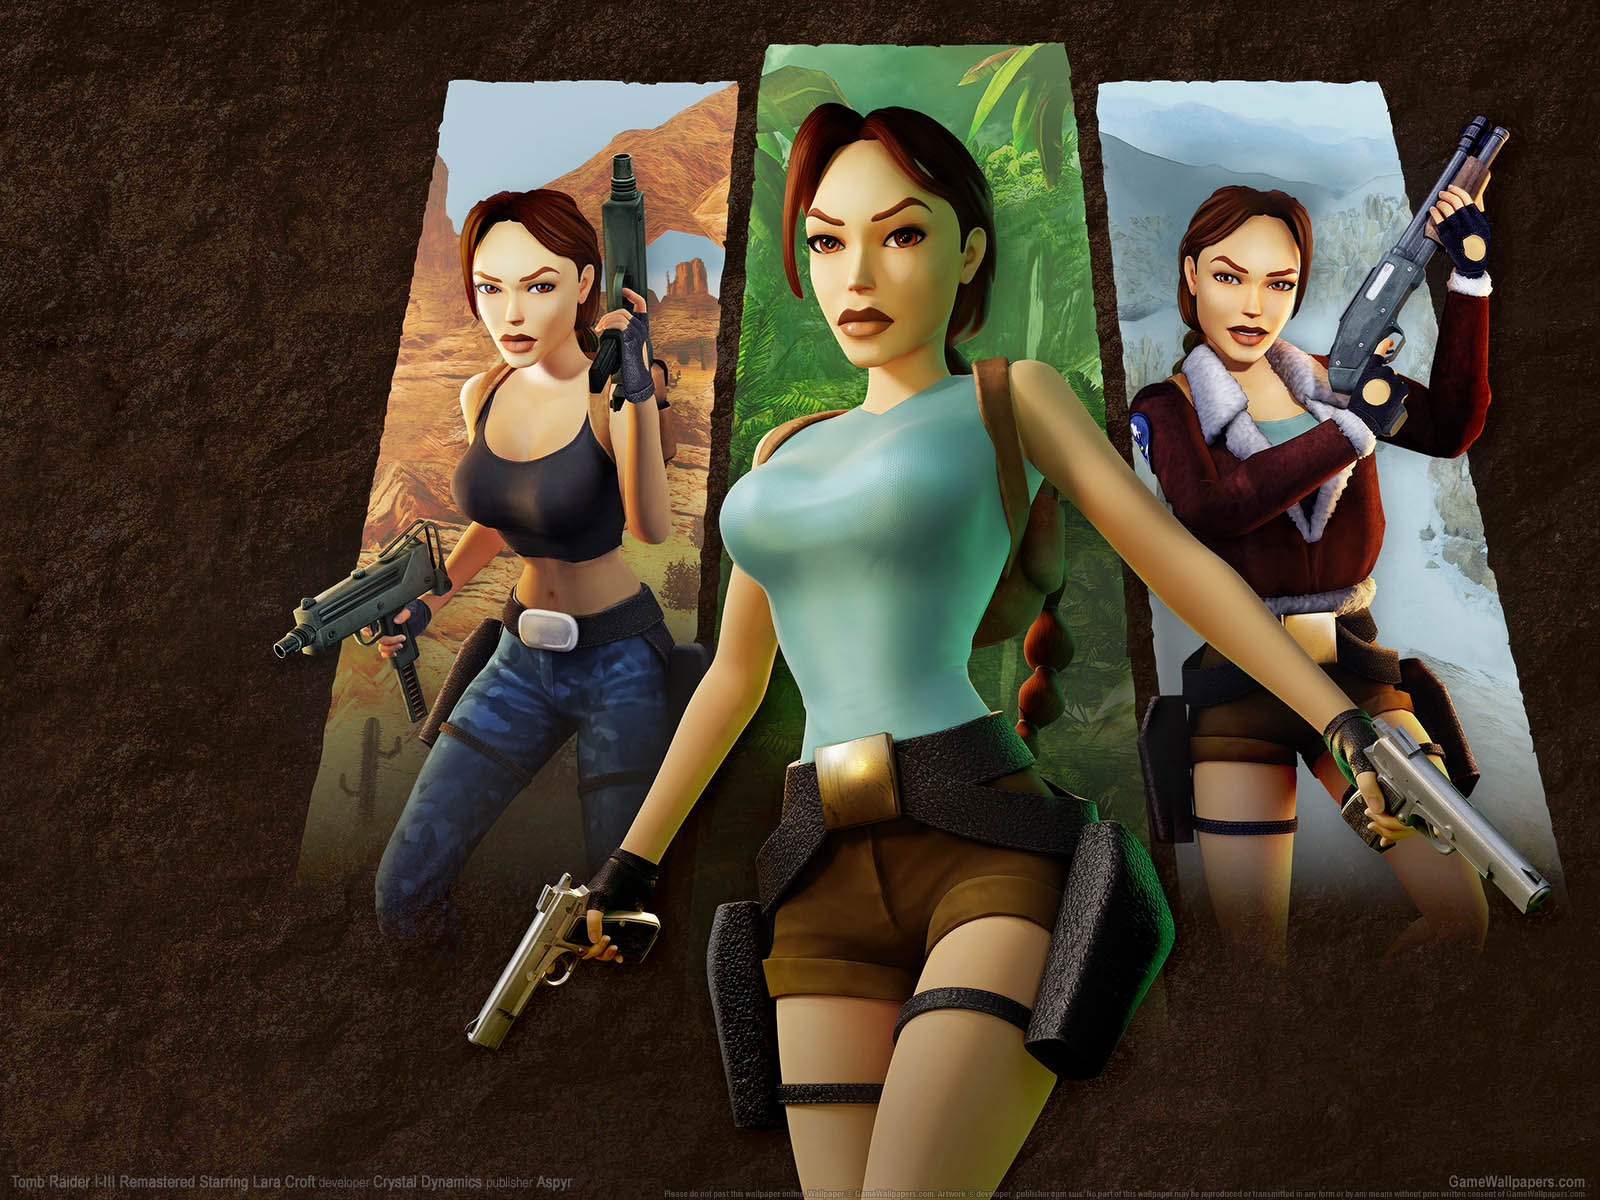 Tomb Raider I-III Remastered Starring Lara Croft fondo de escritorio 01 1600x1200